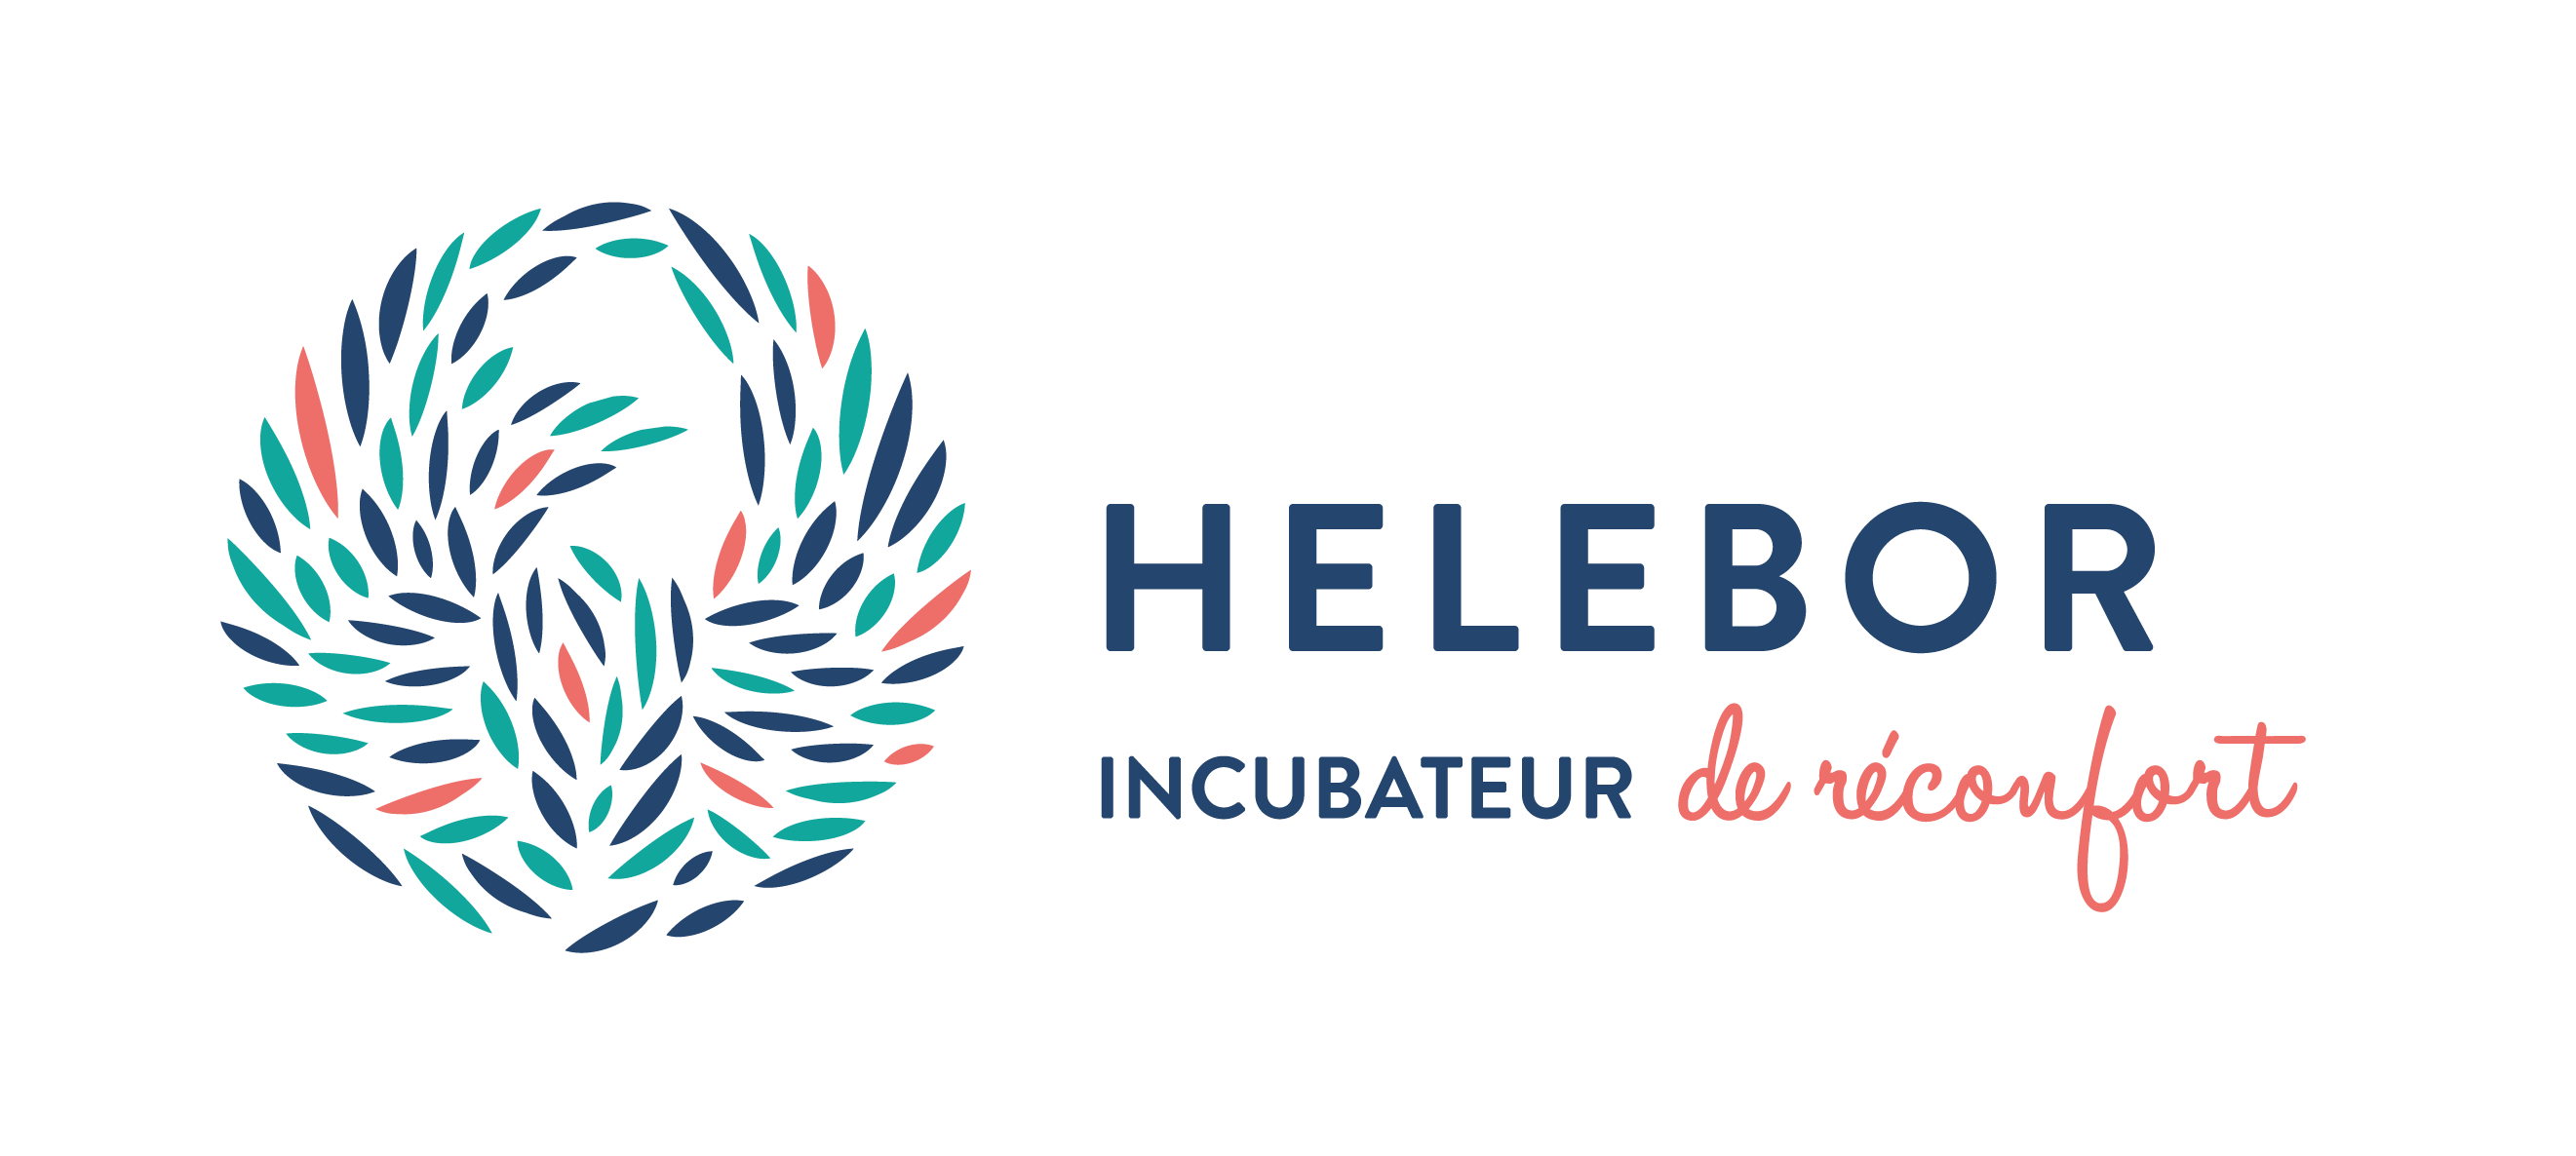 Helebor Logo